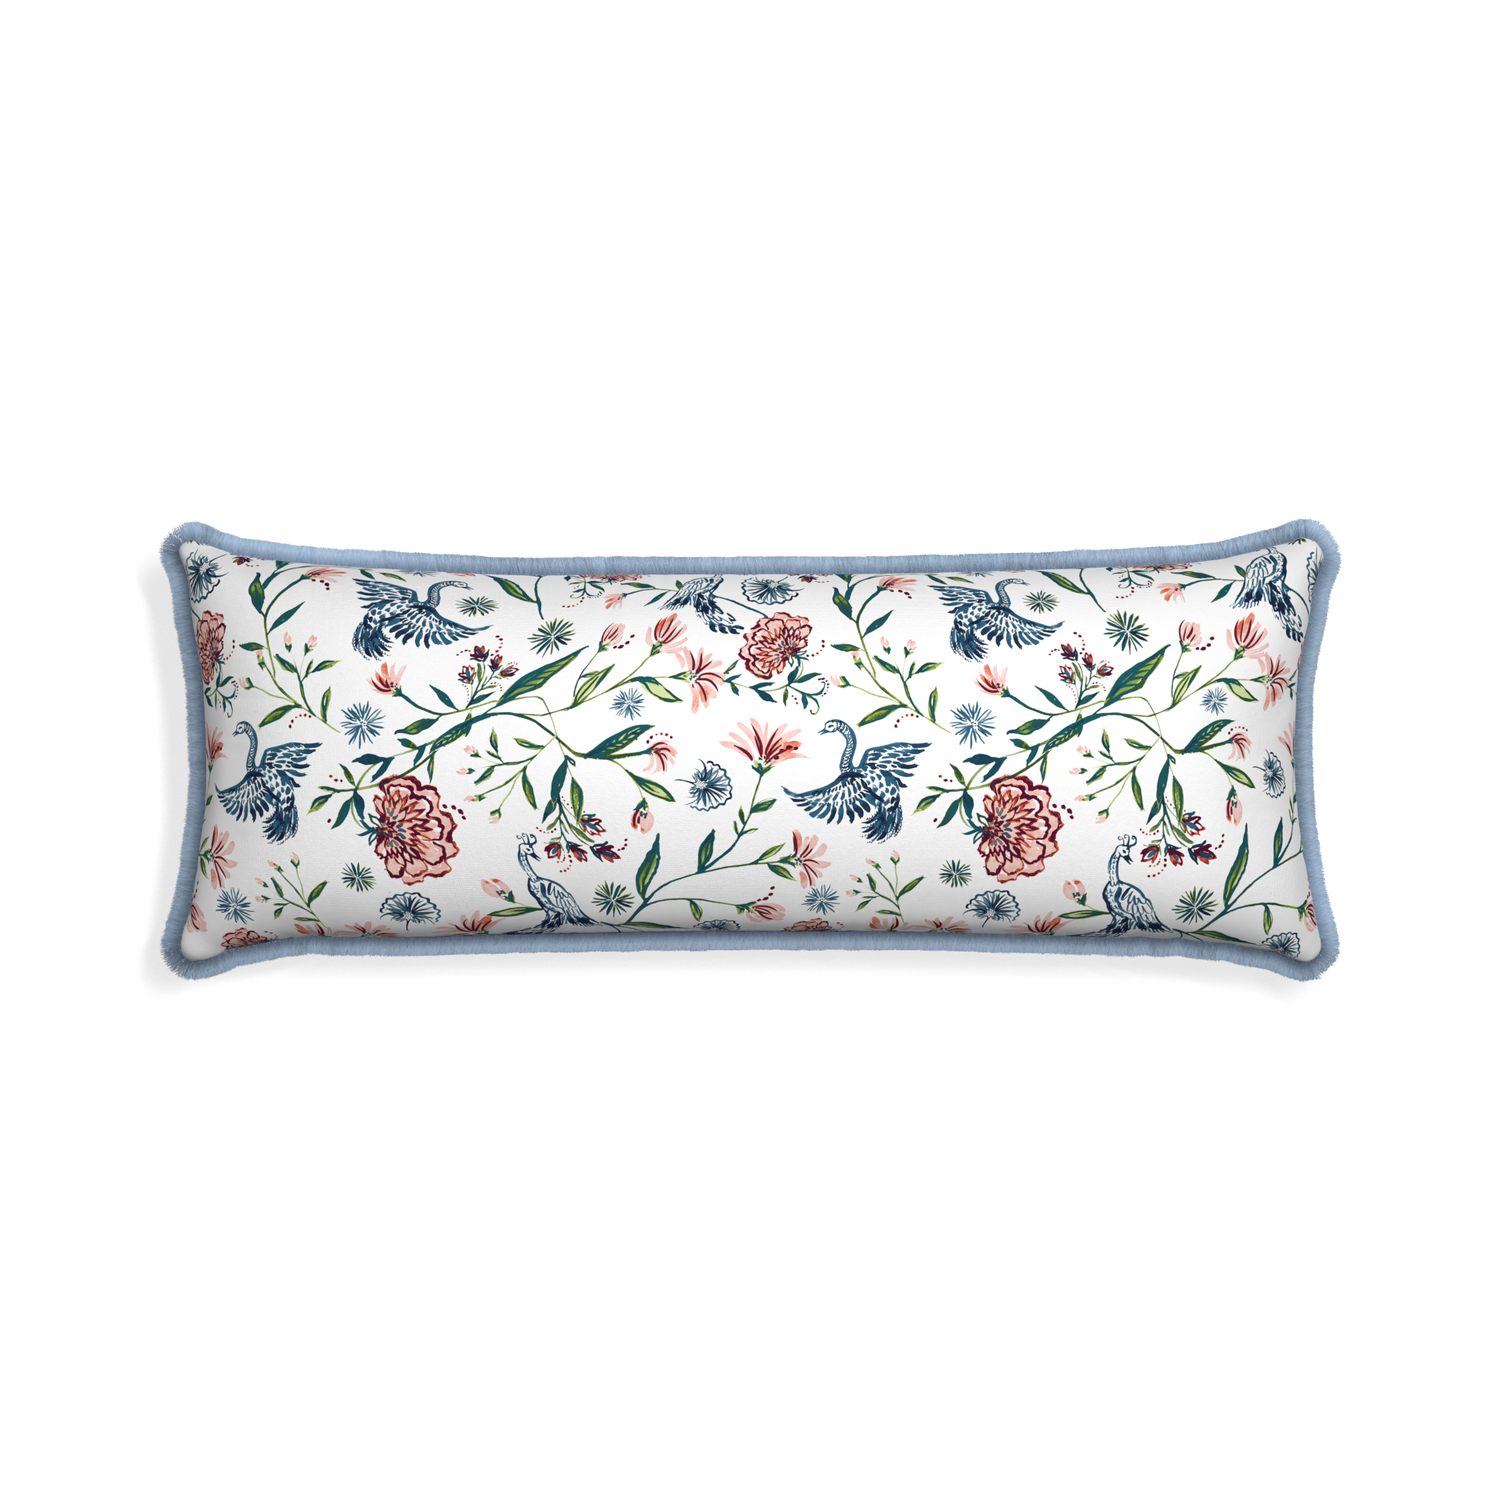 Xl-lumbar daphne cream custom pillow with sky fringe on white background